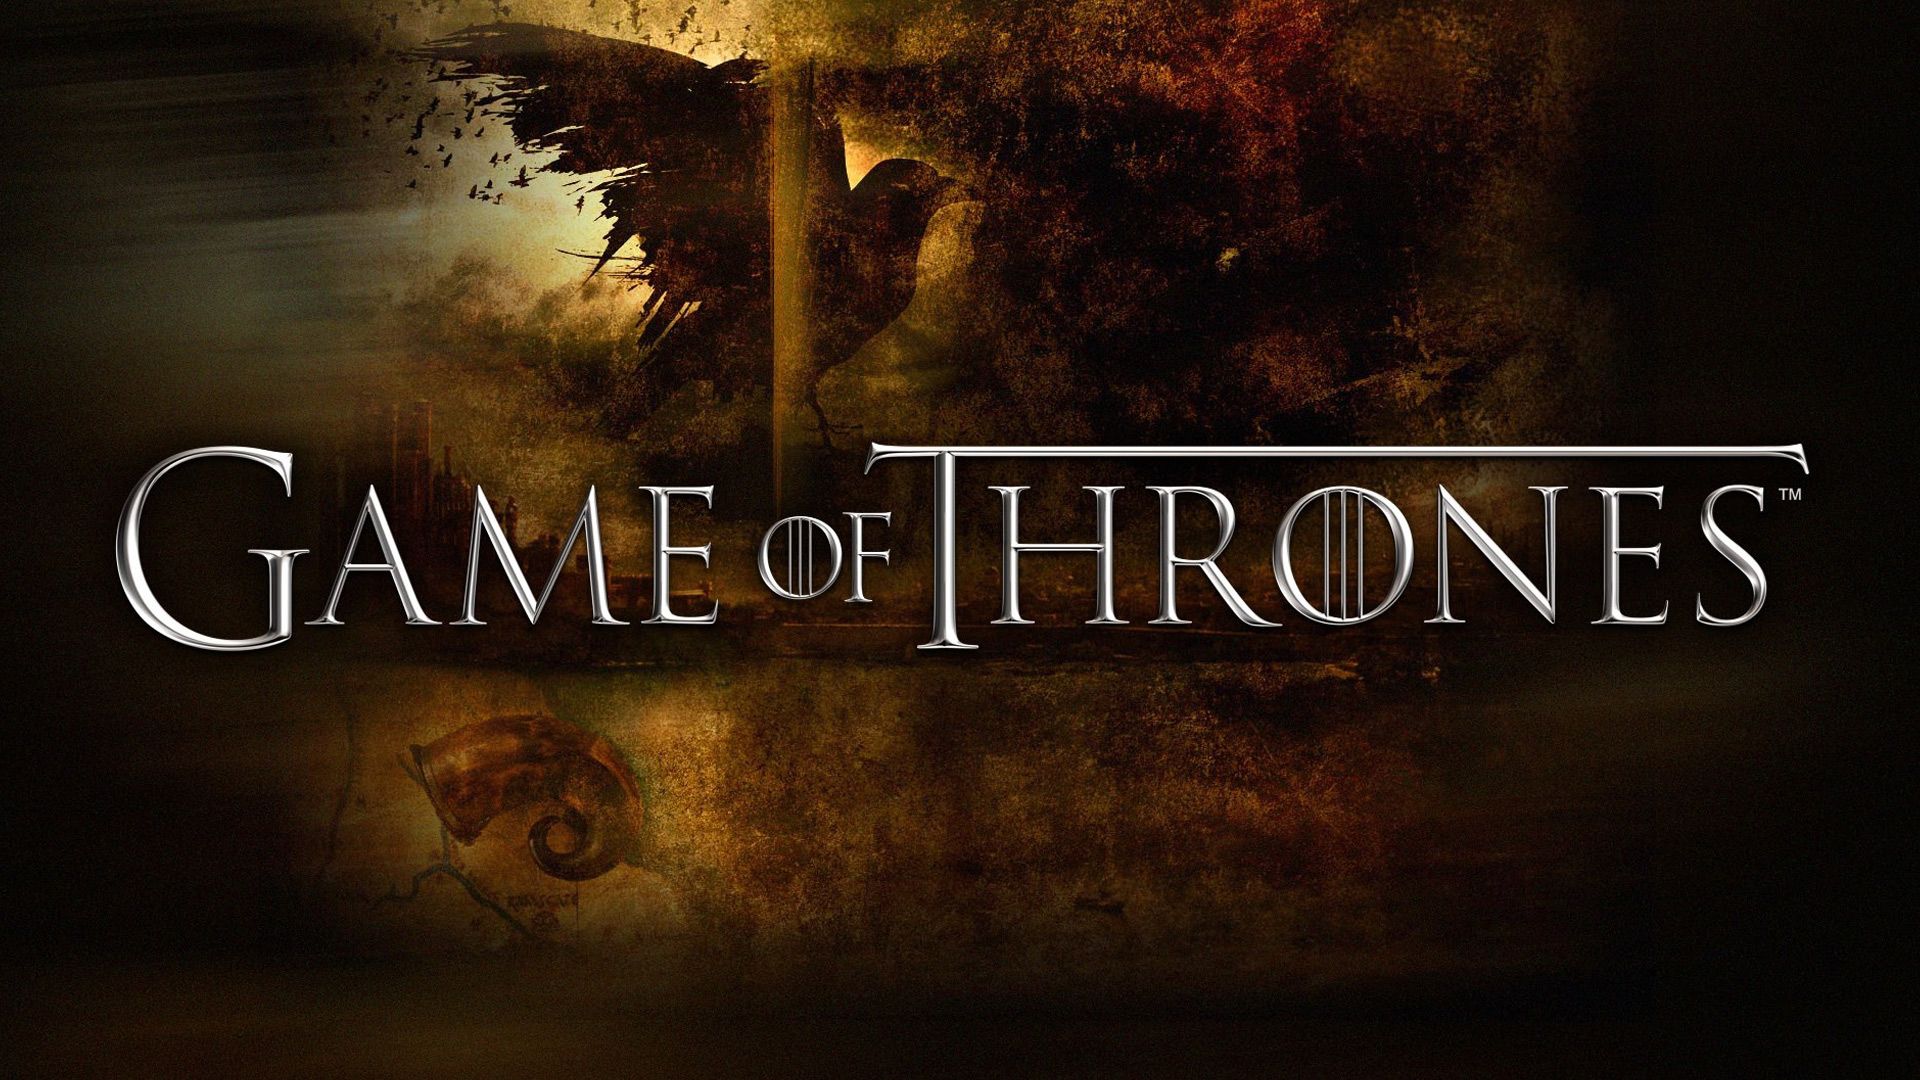 Game of Thrones logo wallpaper